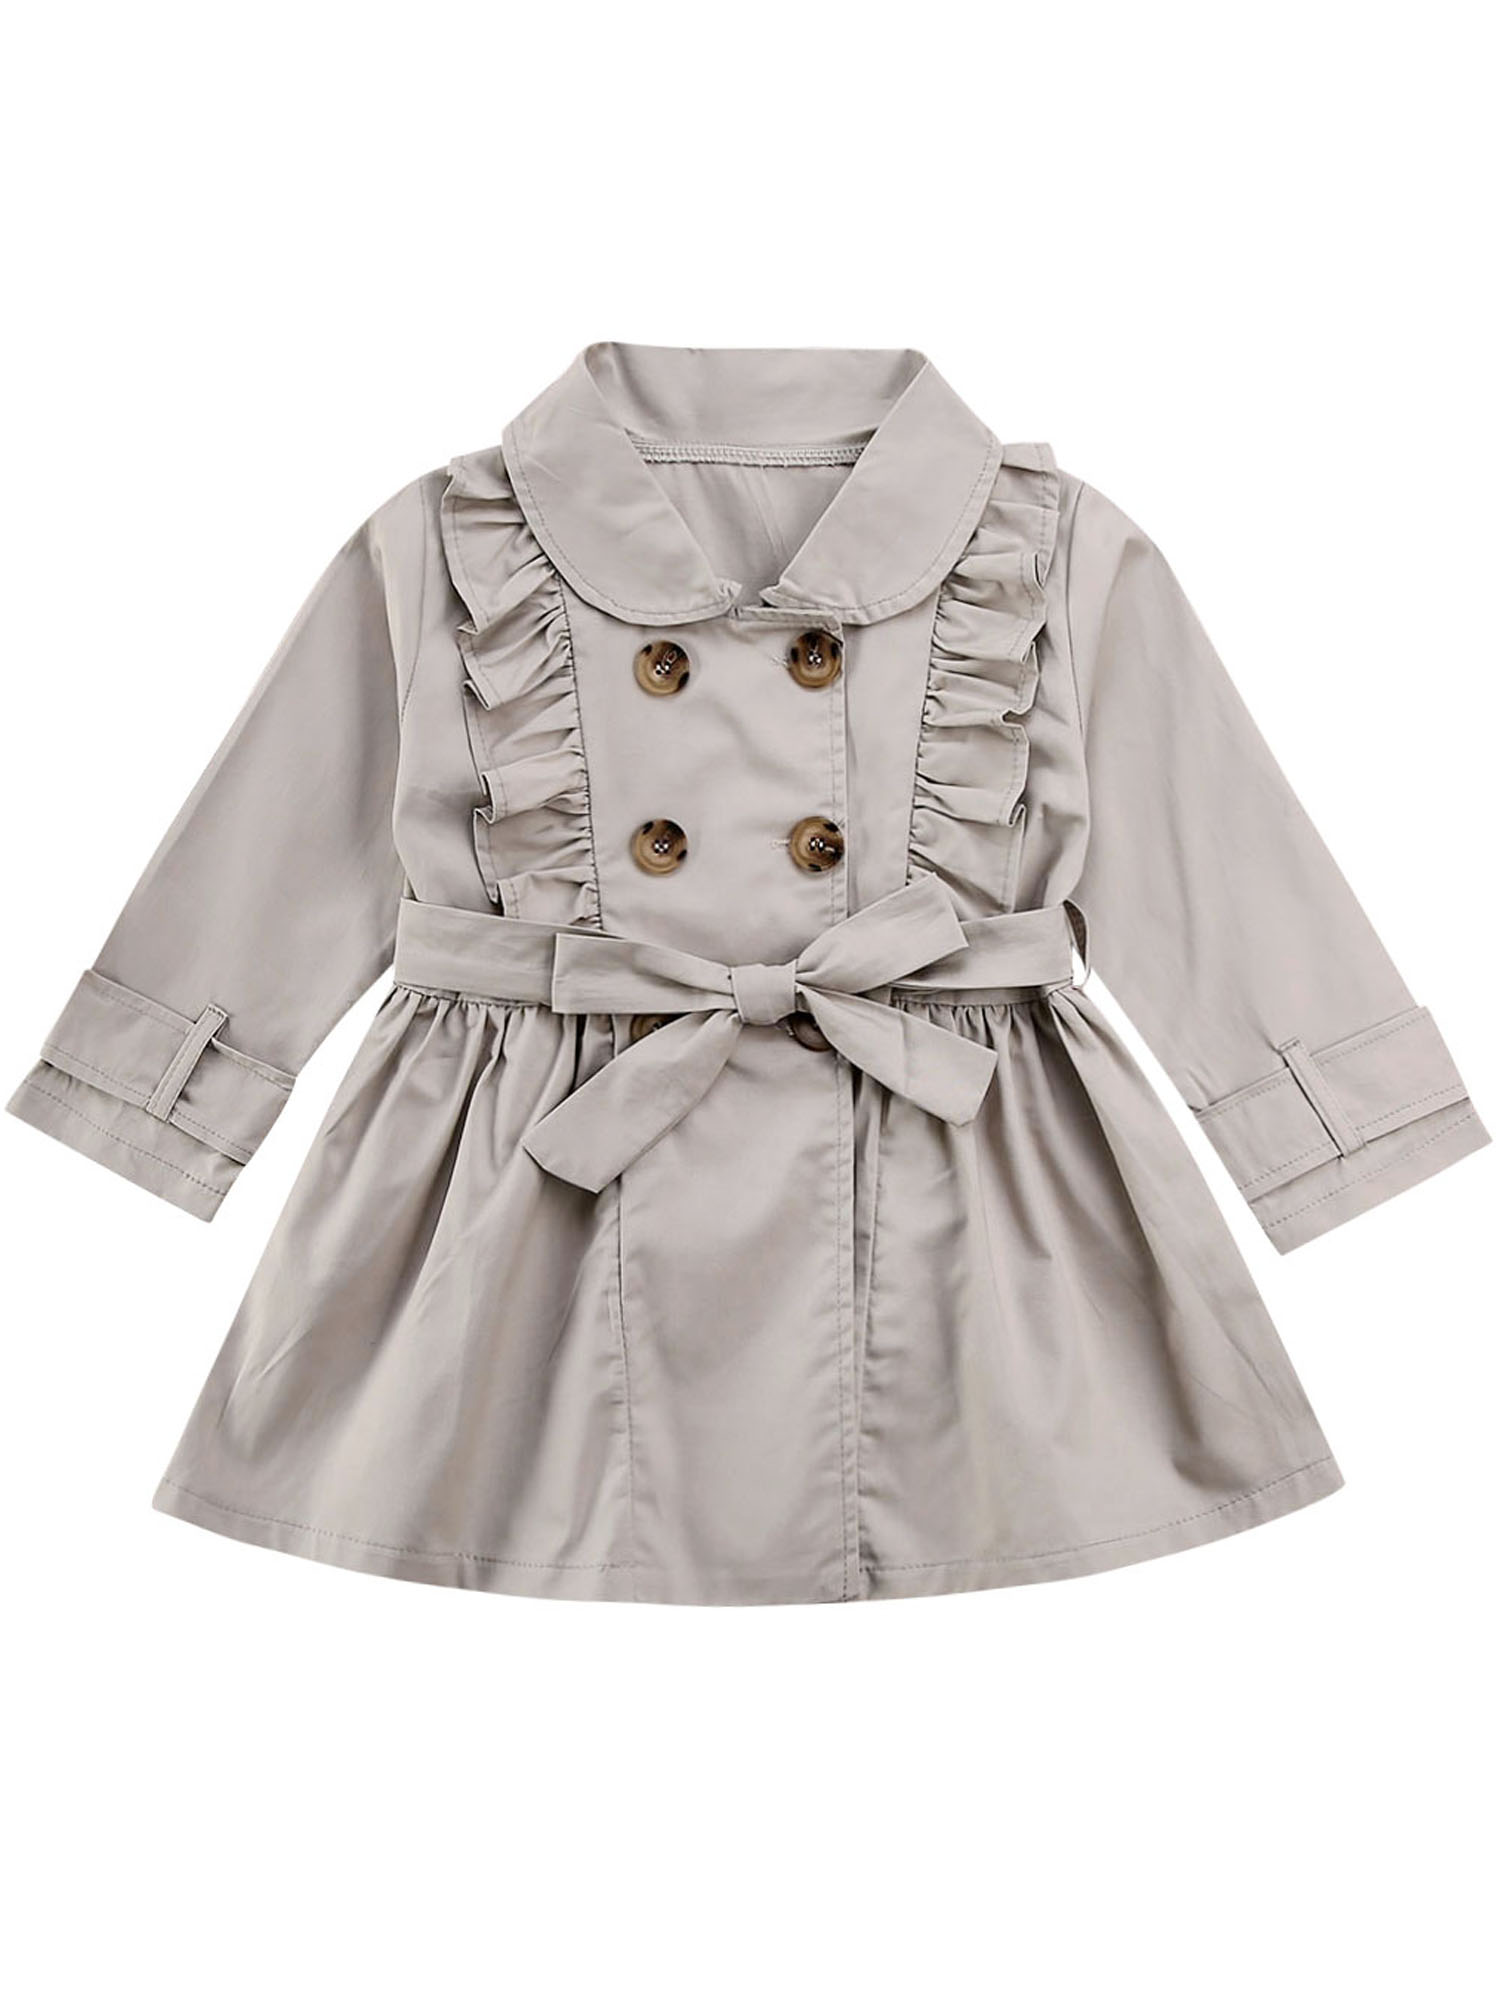 Xingqing Toddler Baby Girl Trench Coat Casual Ruffle Jacket Windbreaker Outerwear - image 1 of 6